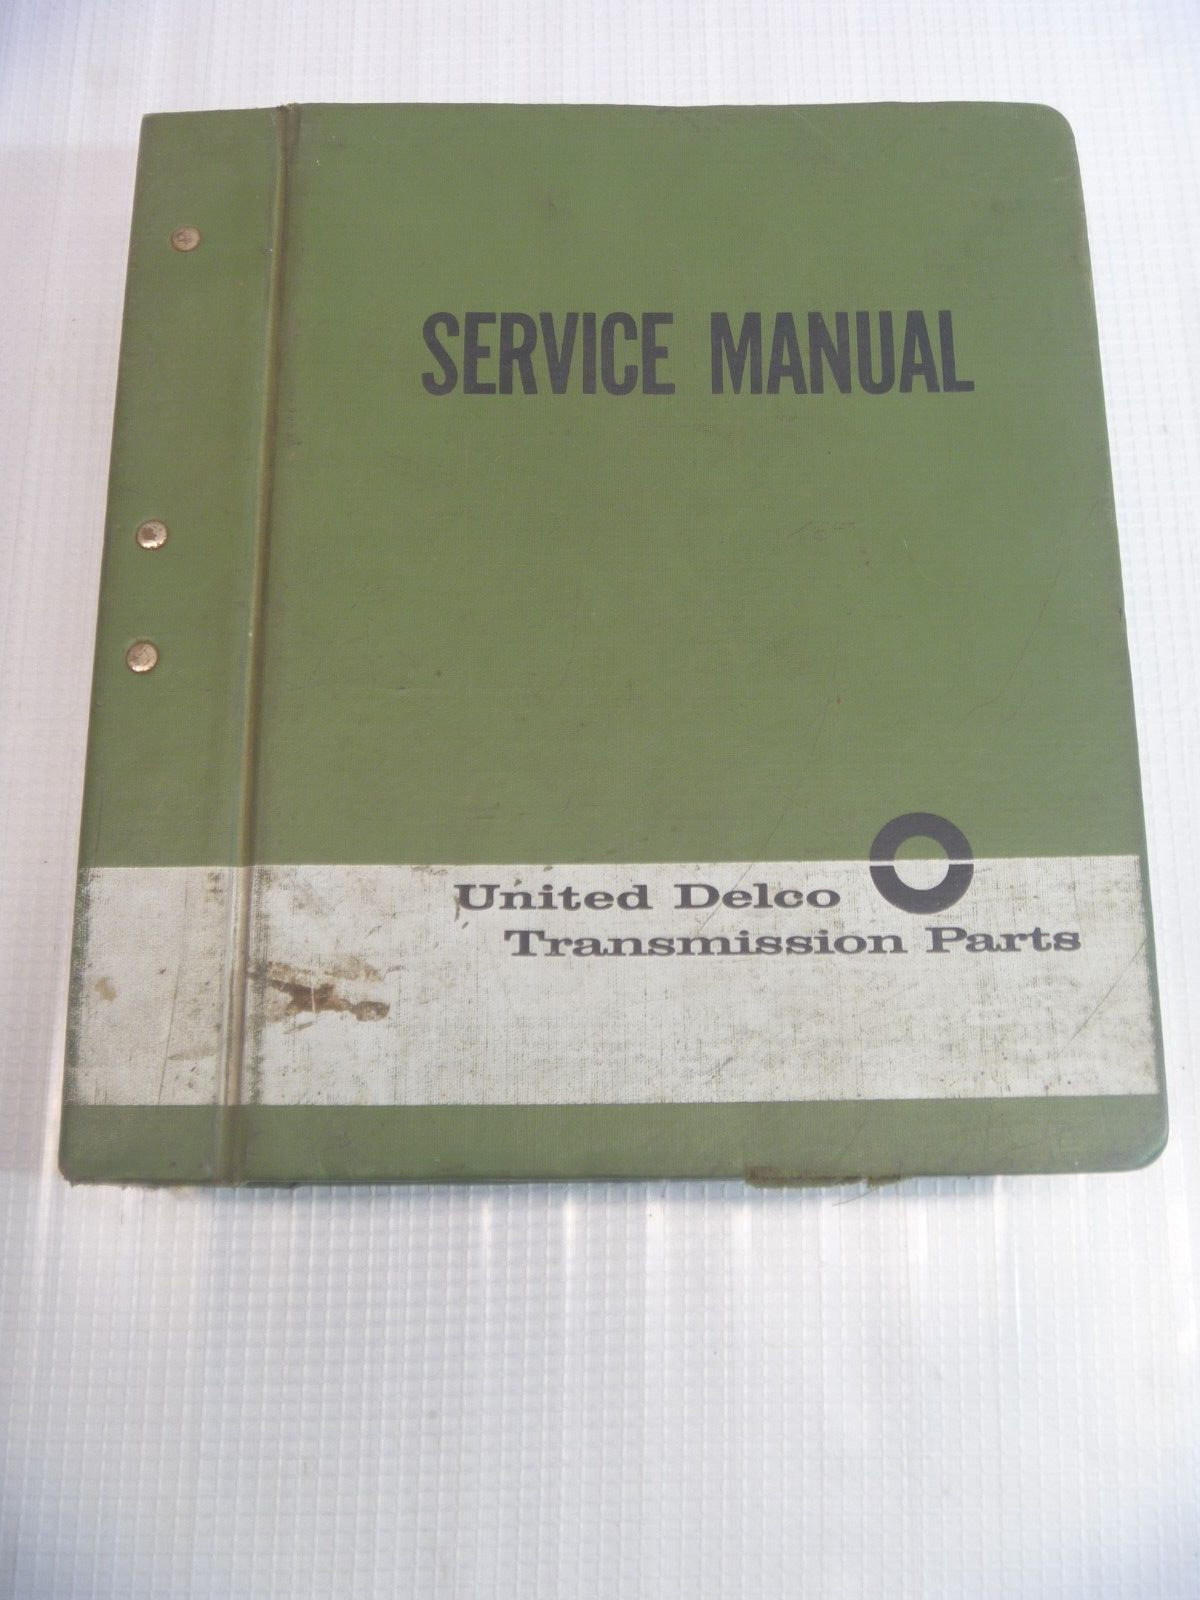 Vintage United Delco Transmission Parts REPAIR Service Manual GM 1961-63